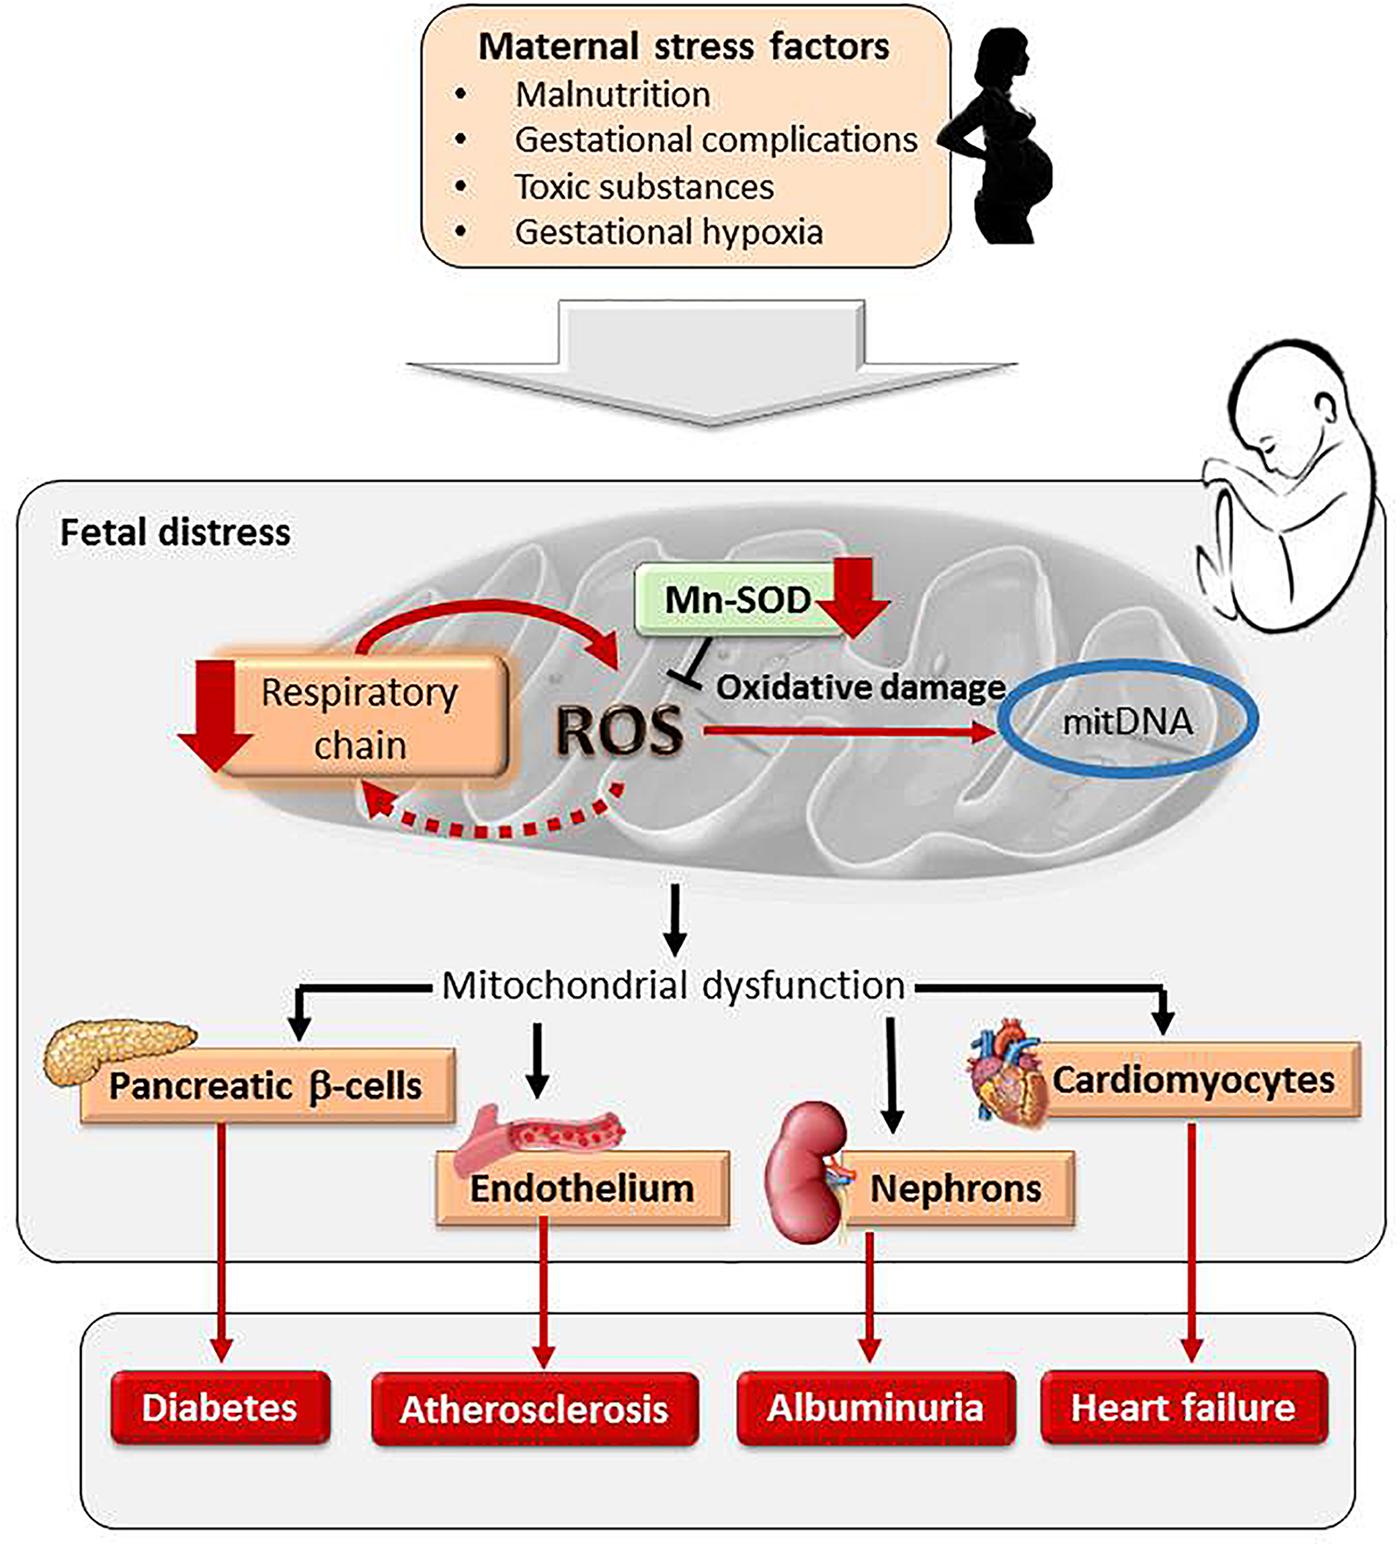 Implication of Oxidative Stress in Fetal Programming of Cardiovascular Disease